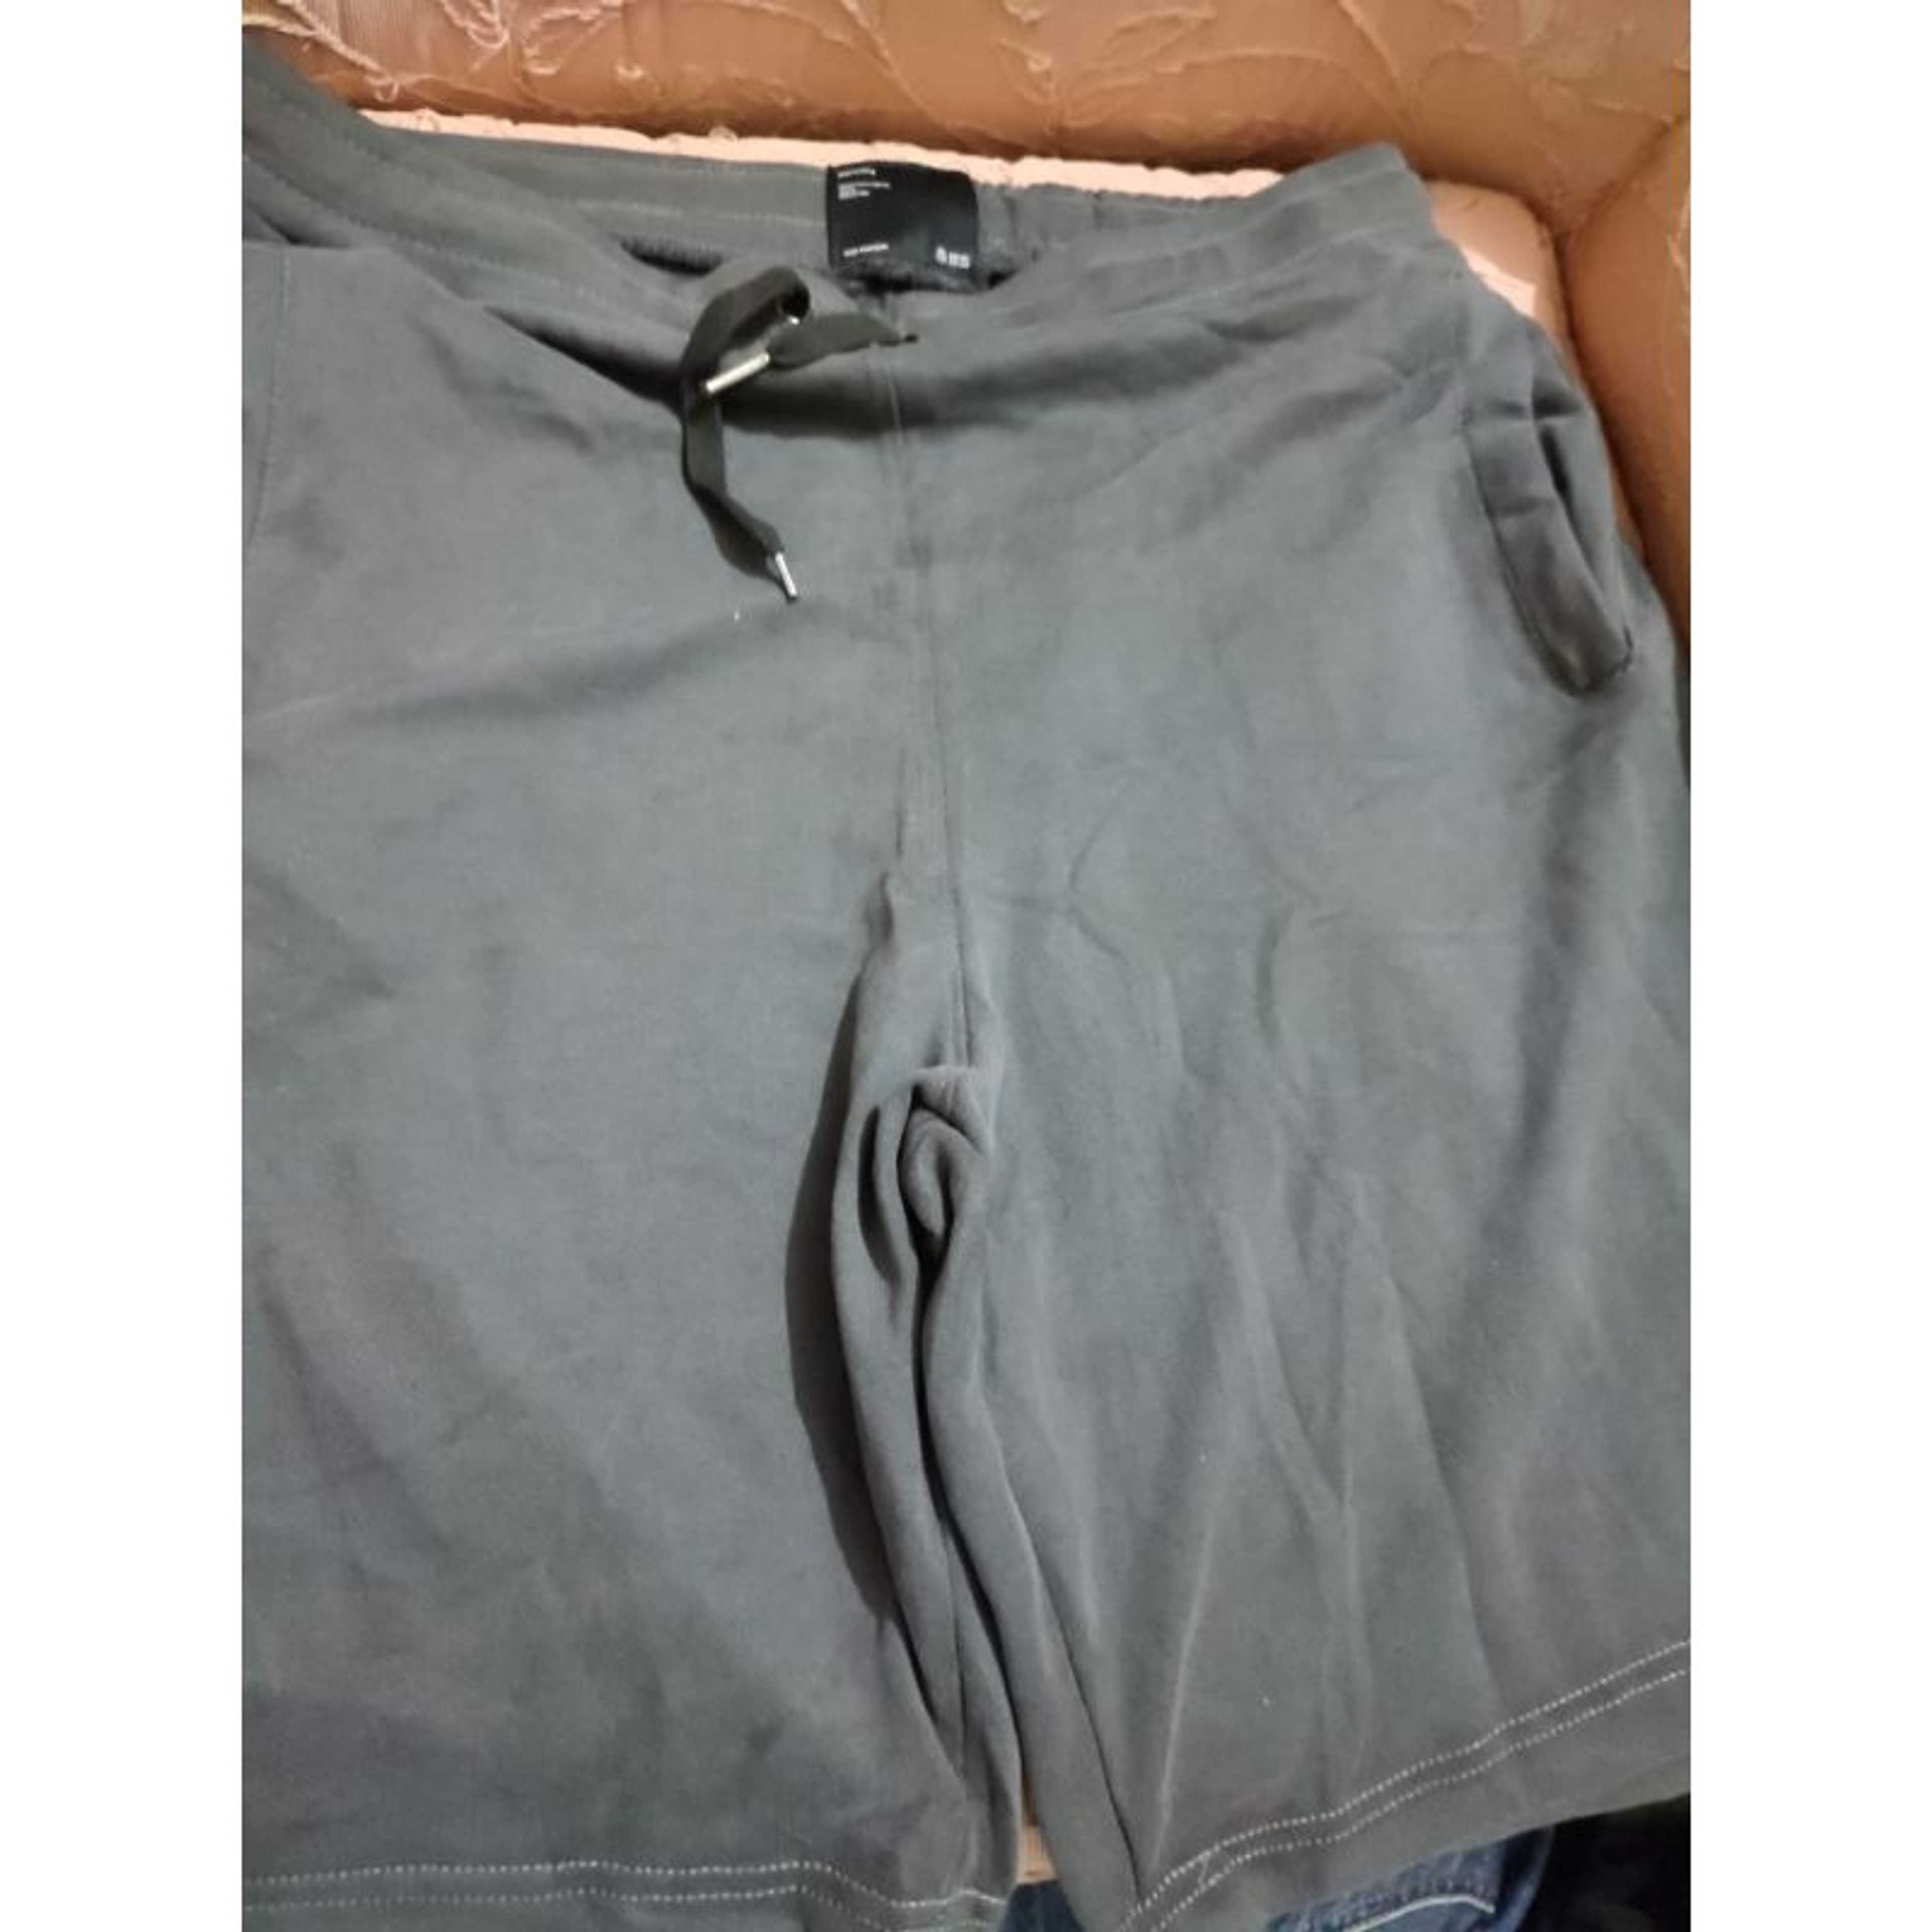 Branded Leftover Shorts in Grey Color